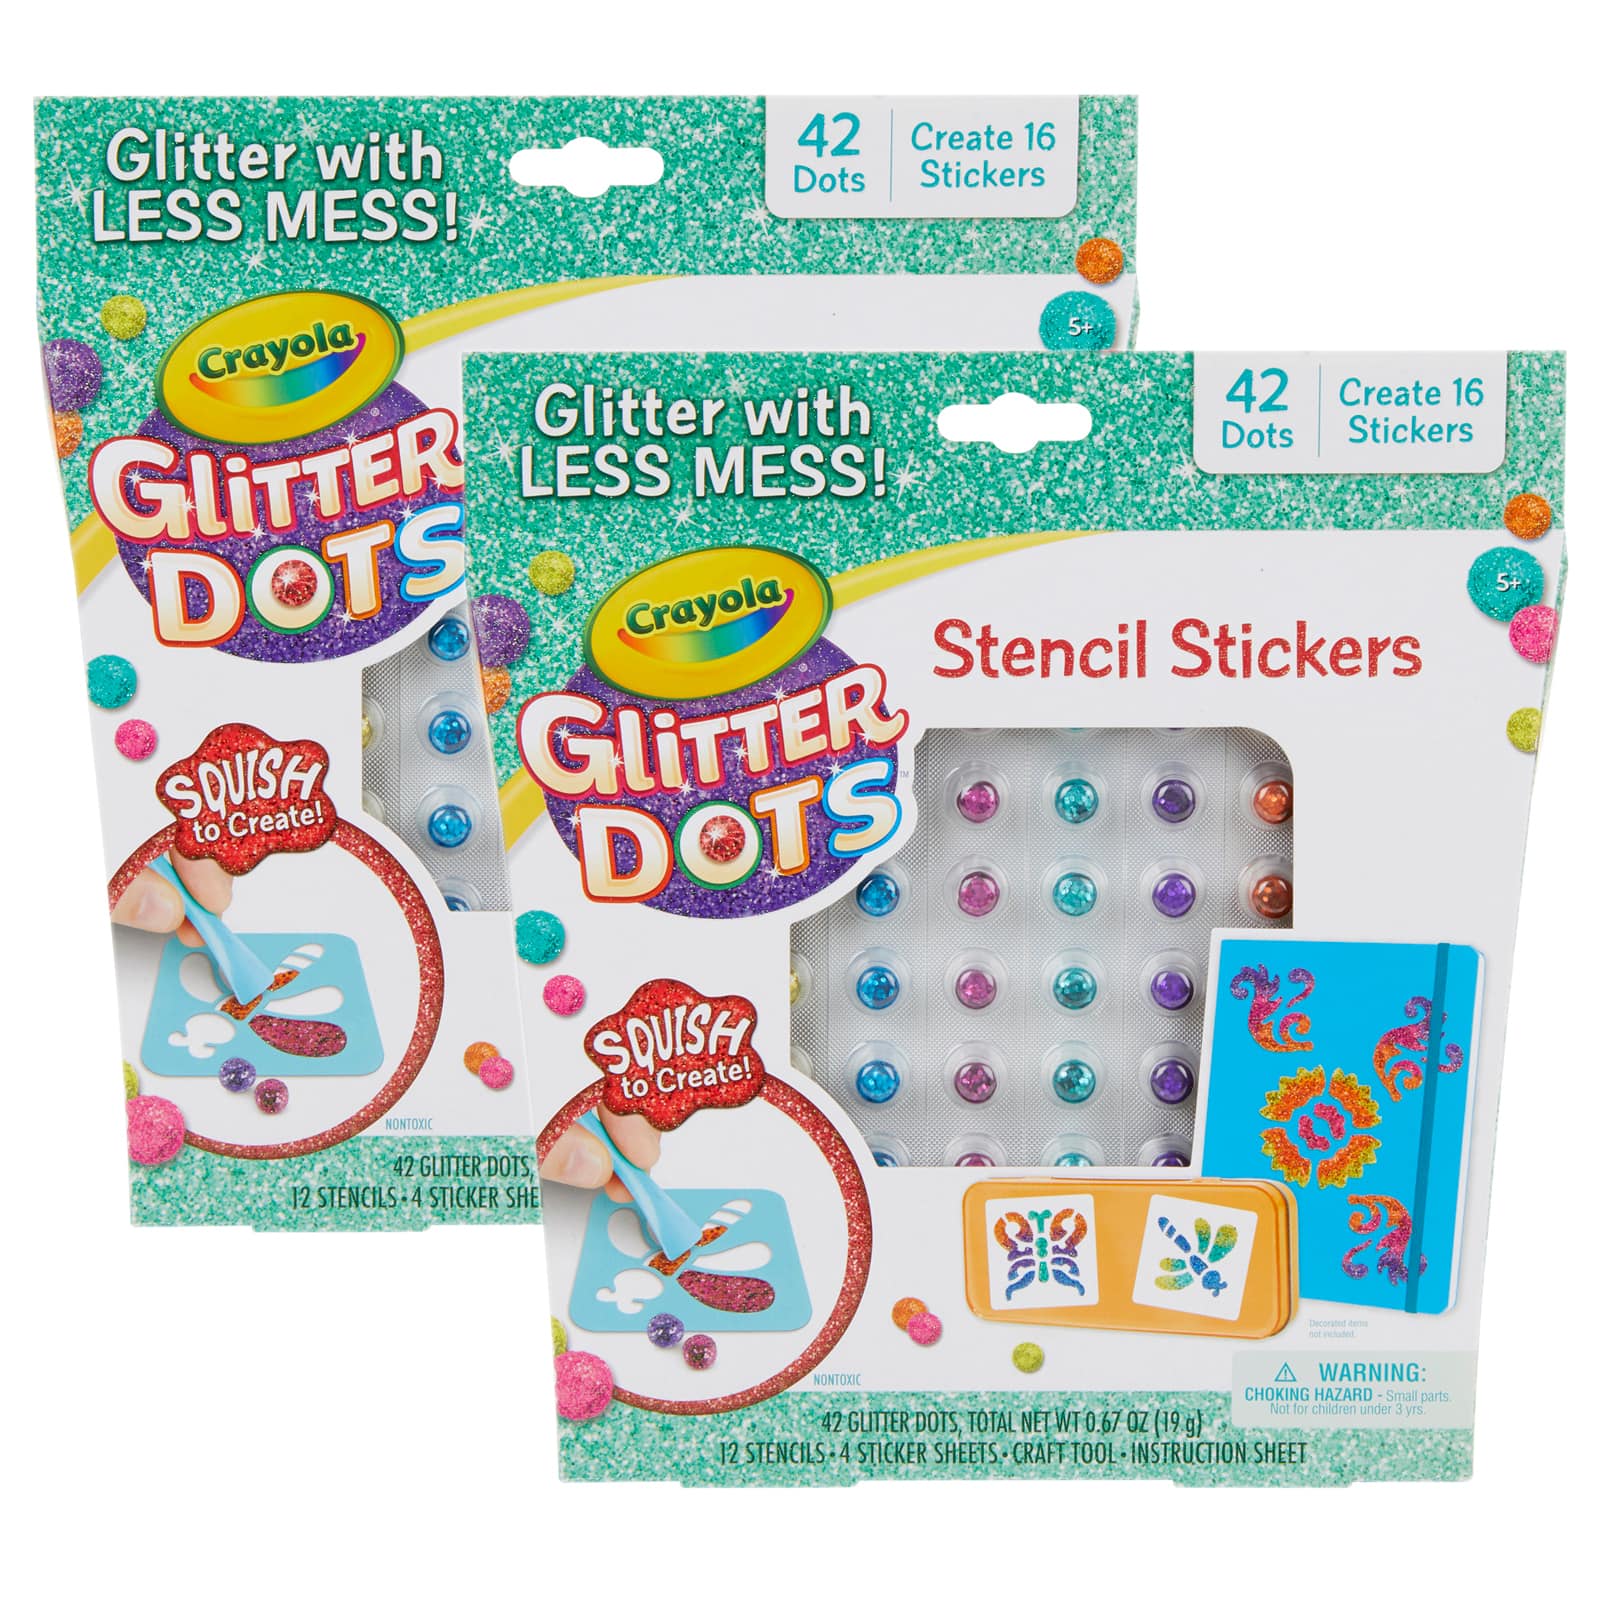 Crayola Glitter Dots Sticker Stencils - Custom Glitter Stickers